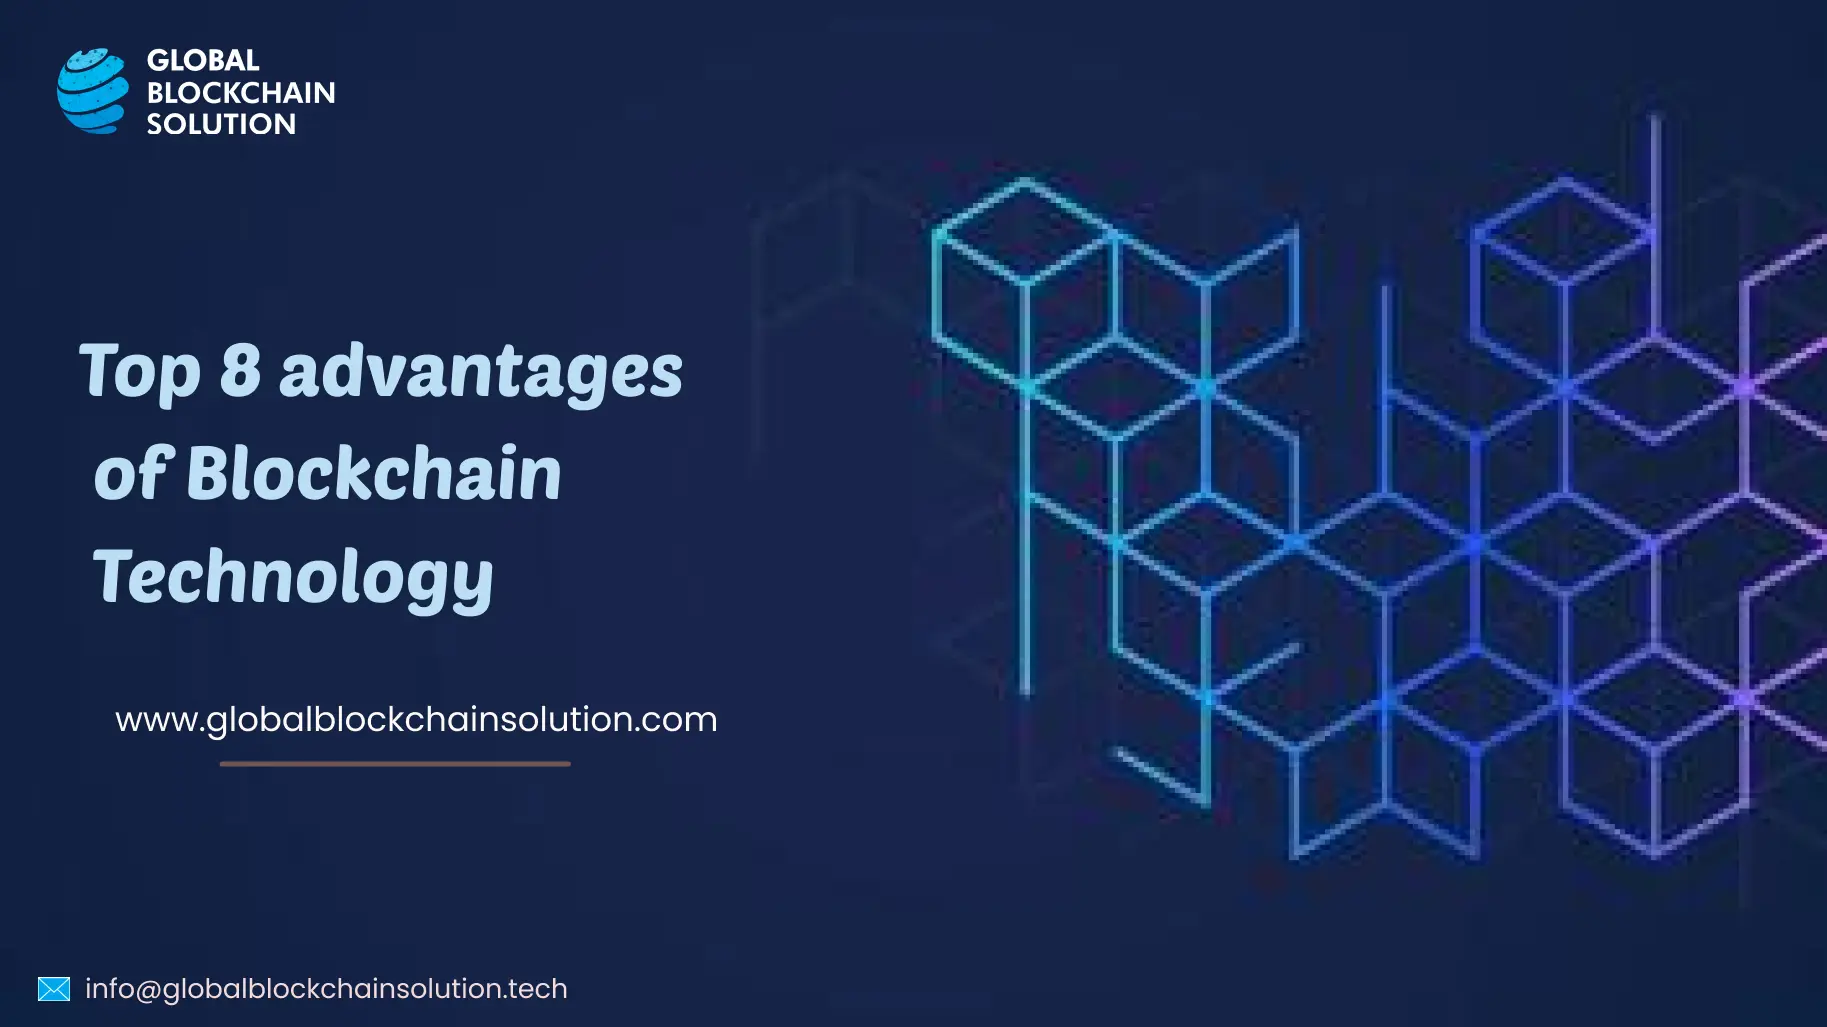 Top 8 advantages of Blockchain Technology